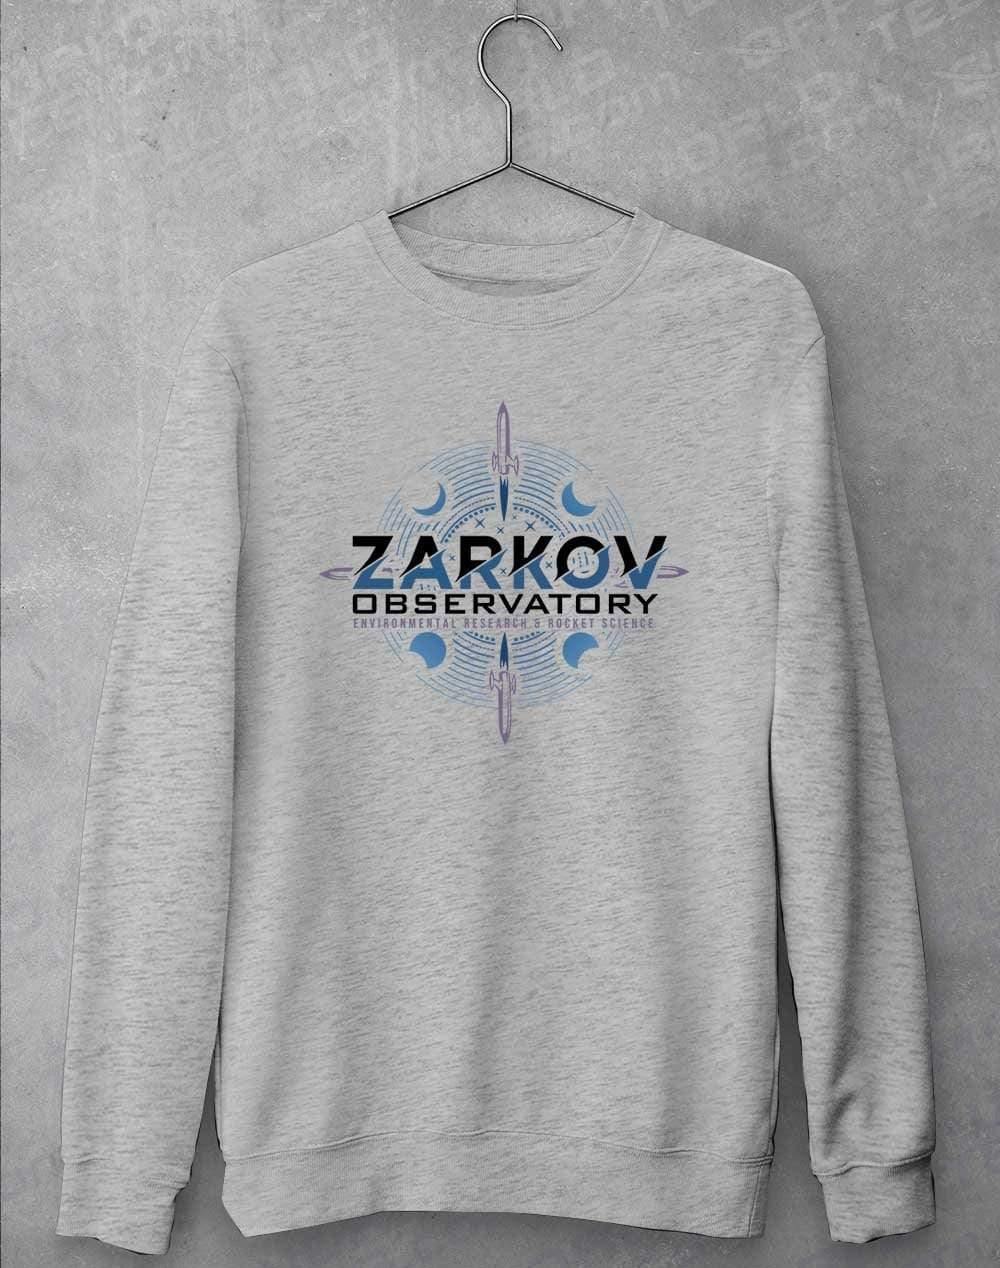 Zarkov Observatory Sweatshirt S / Heather Grey  - Off World Tees